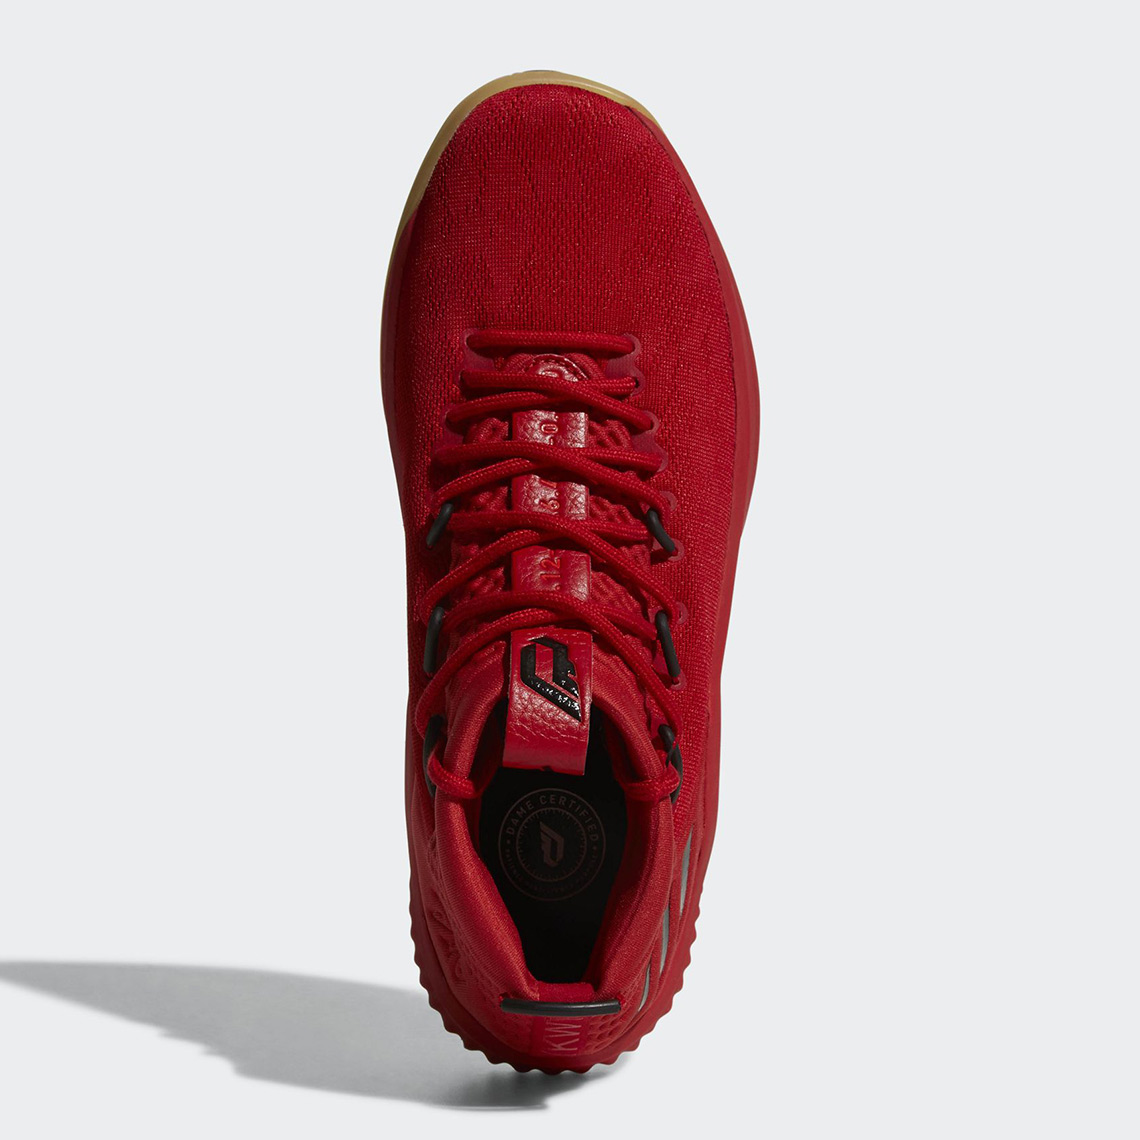 Adidas Dame 4 Red Gum Cq0186 4